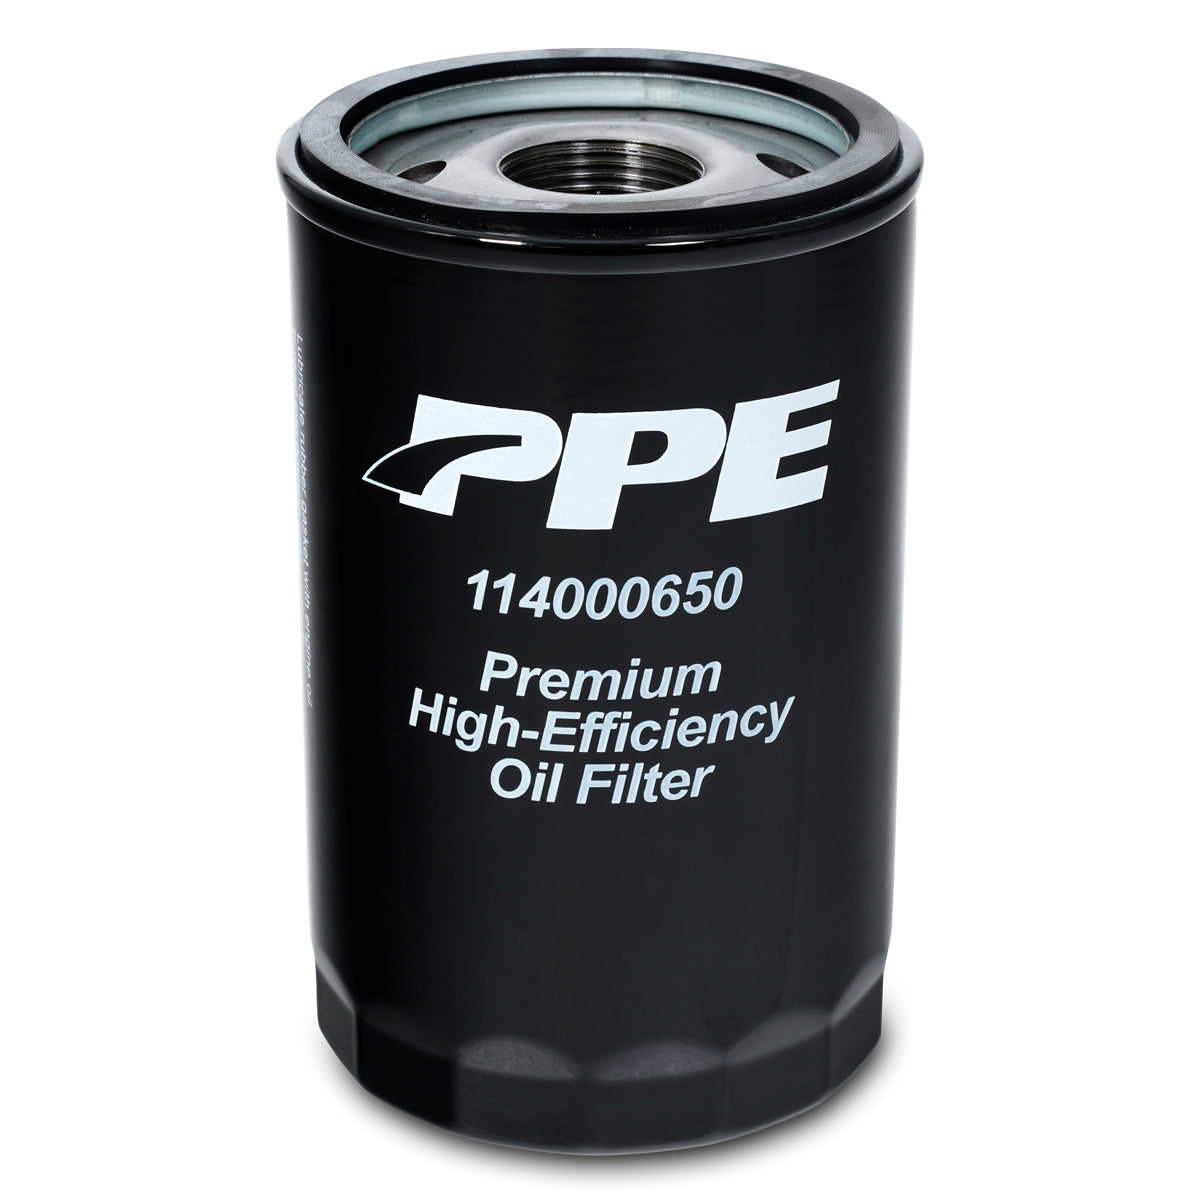 PPE Diesel Premium High-Efficiency Oil Filter 2019-2021+ GM Silverado 1500 3.0L (AC Delco PF66) 114000650